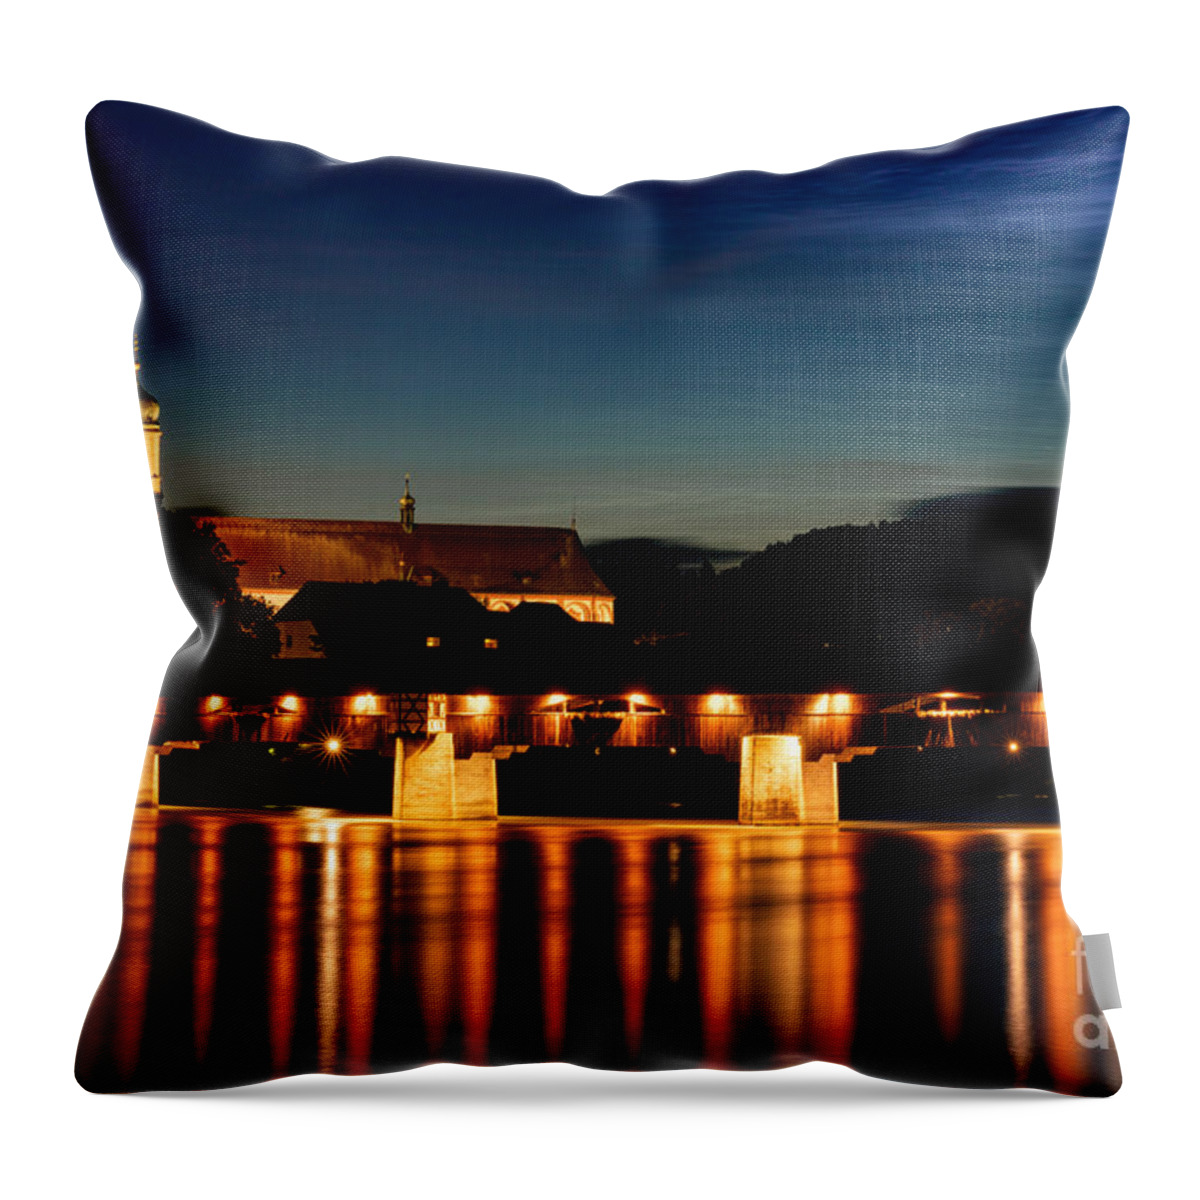 Rhine Throw Pillow featuring the photograph Bad Saeckingen by Nando Lardi